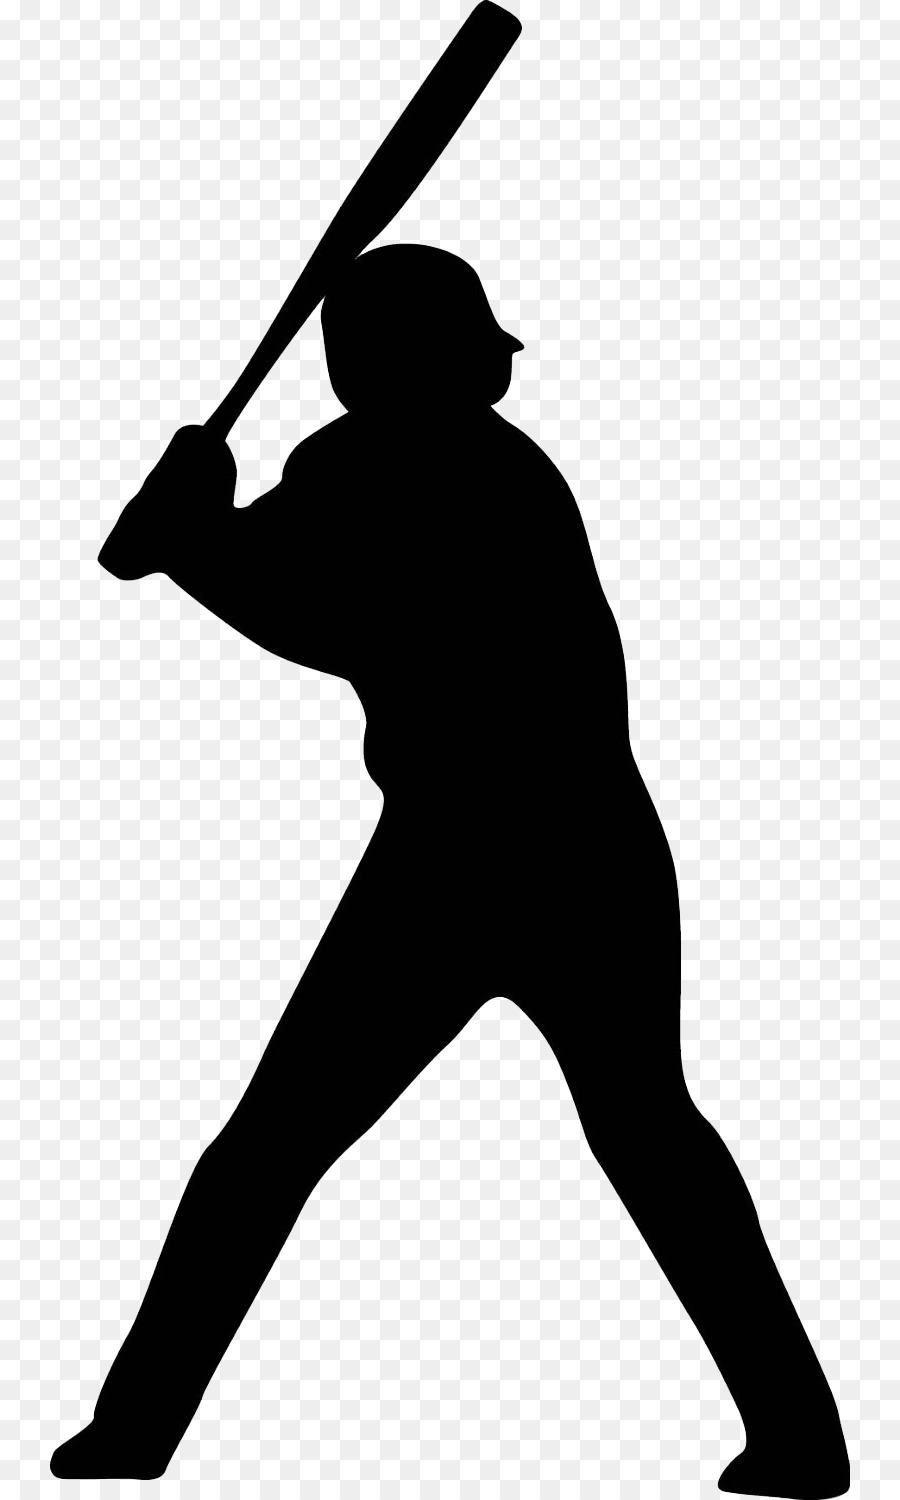 Baseball player Batter Softball Clip art - baseball png download - 800*1500 - Free Transparent Baseball png Download.